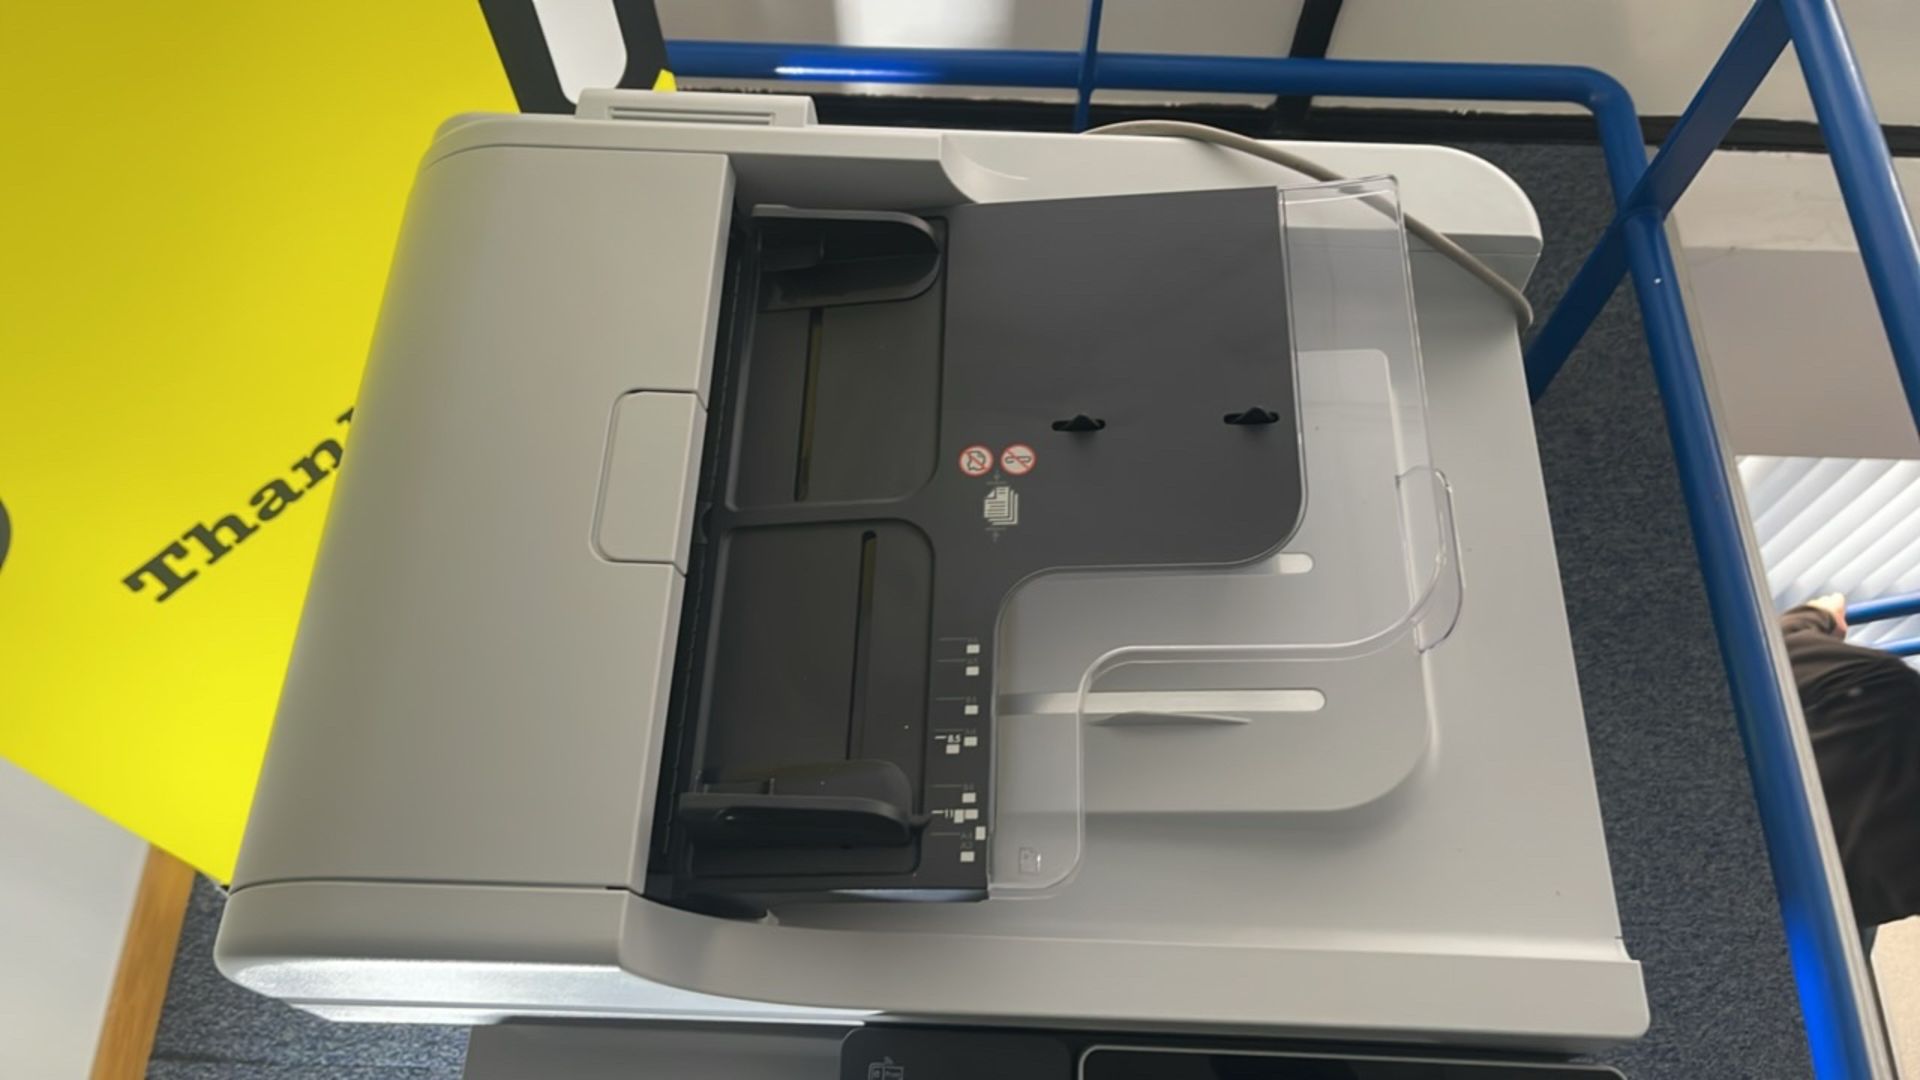 HP LaserJet 700 Color MFP Printer - Image 3 of 6